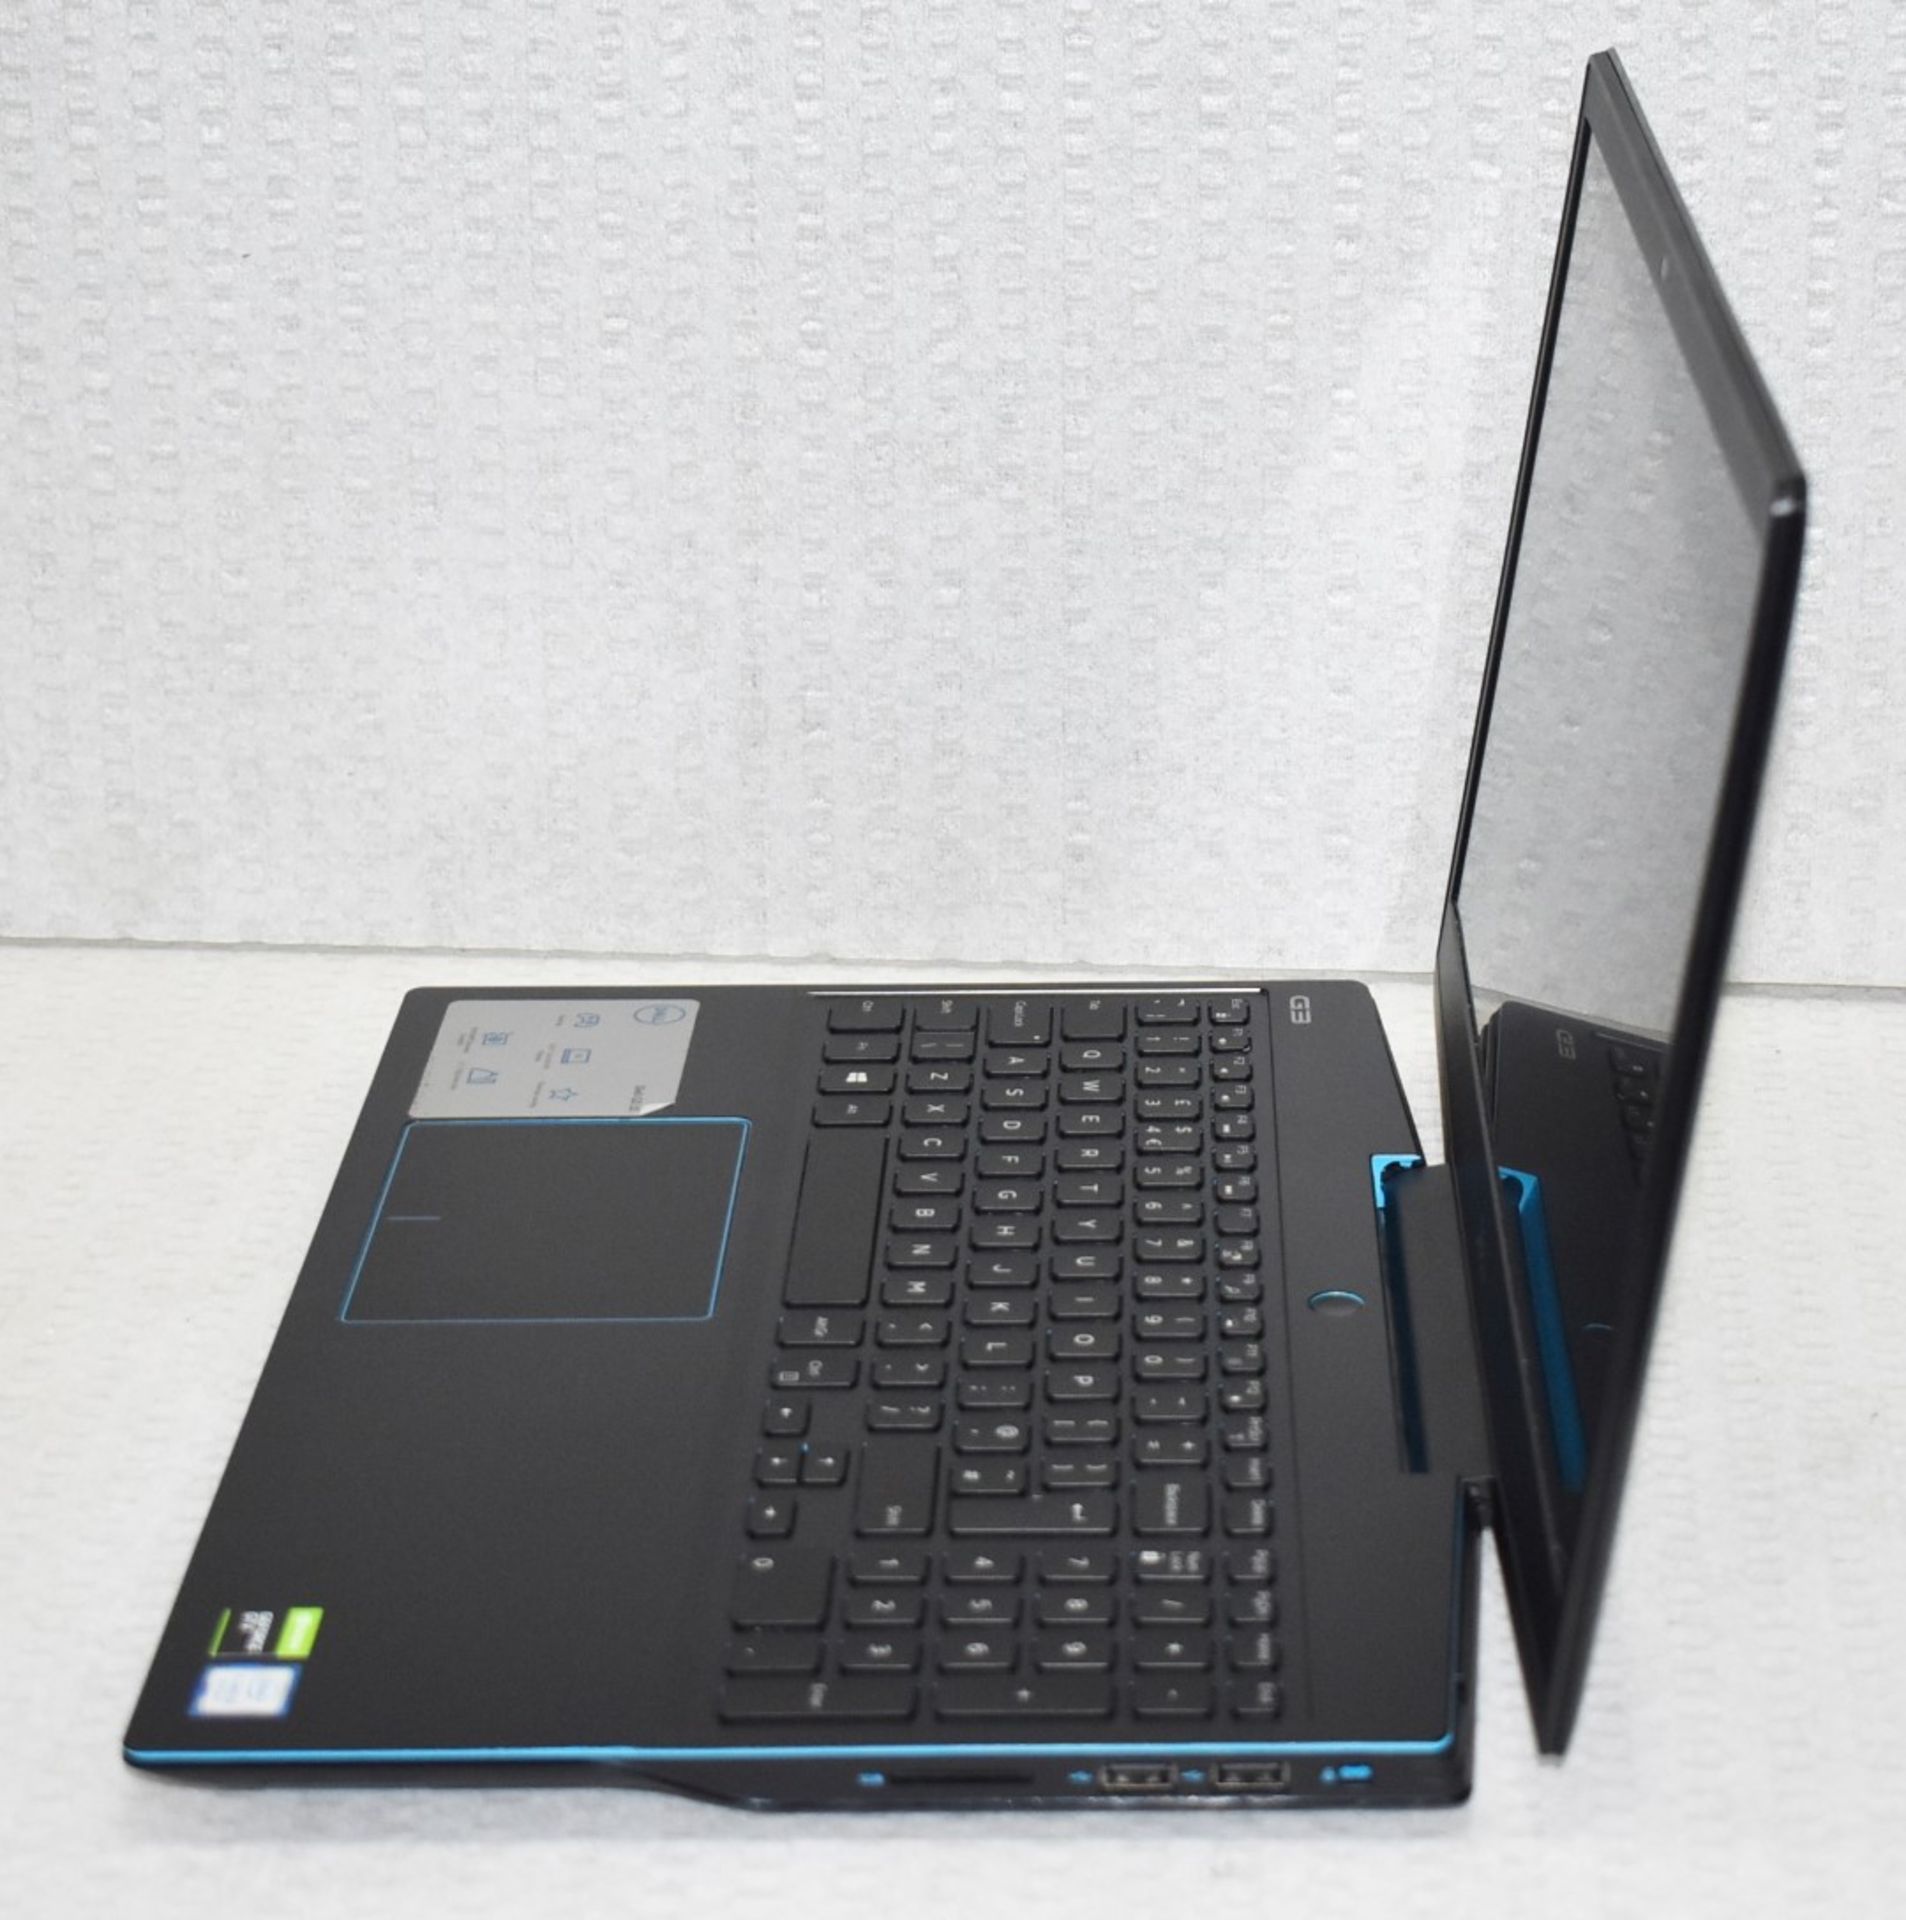 1 x Dell G3 15.6" FHD Gaming Laptop - Intel I5-9300H CPU, 8gb DDR4 Ram, 500gb SSD, GTX1050 Graphics - Image 15 of 30